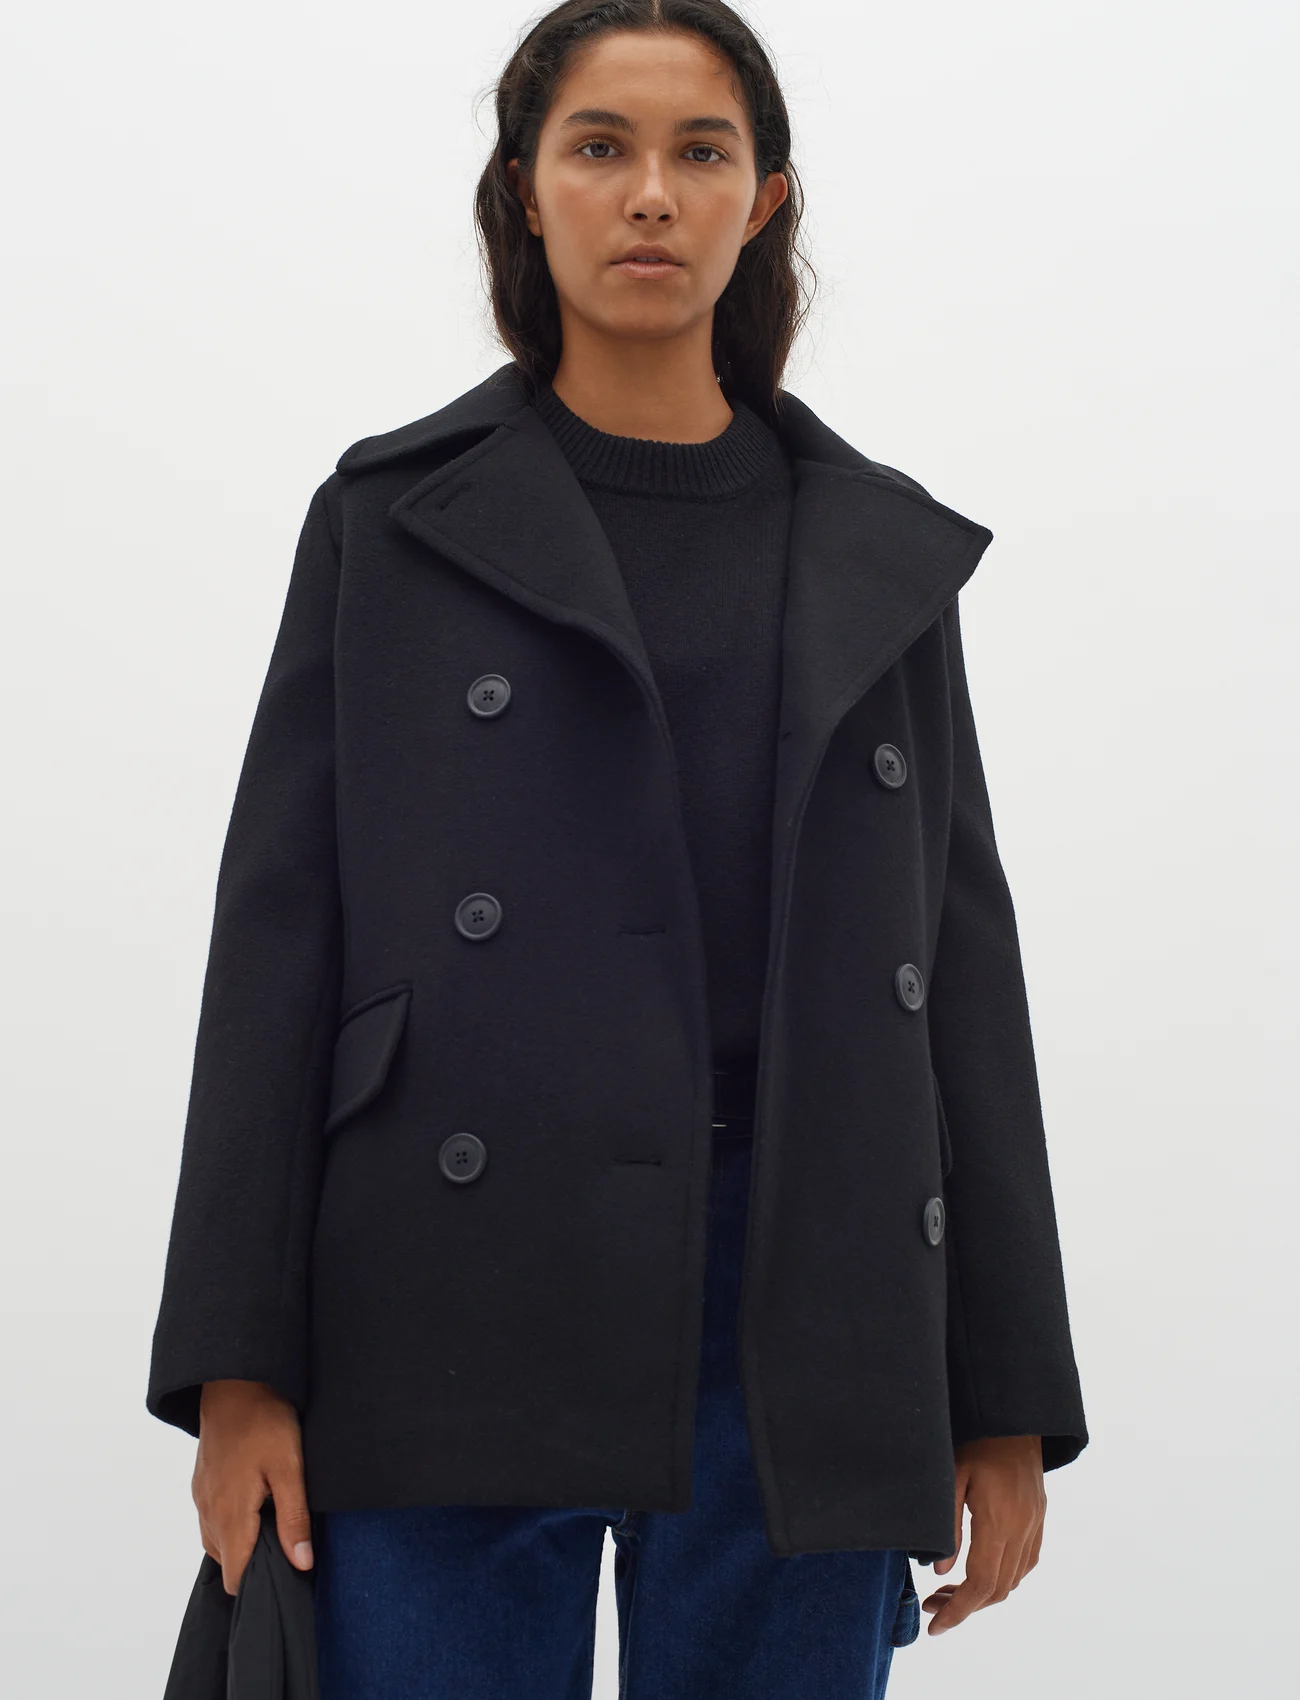 InWear - PerryIW Sailor Coat - winter coats - black - 0